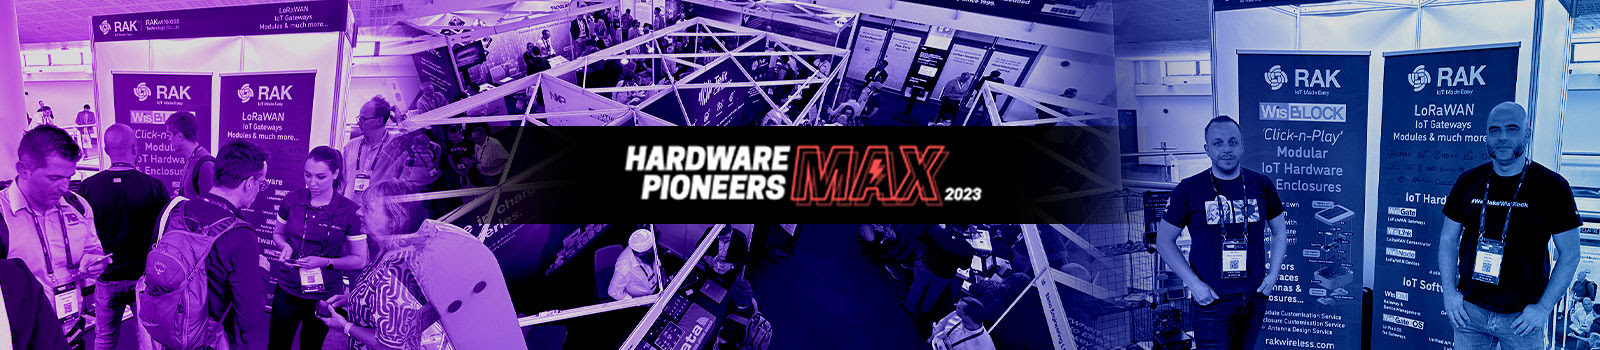 Hardware Pioneers Max 2023 event